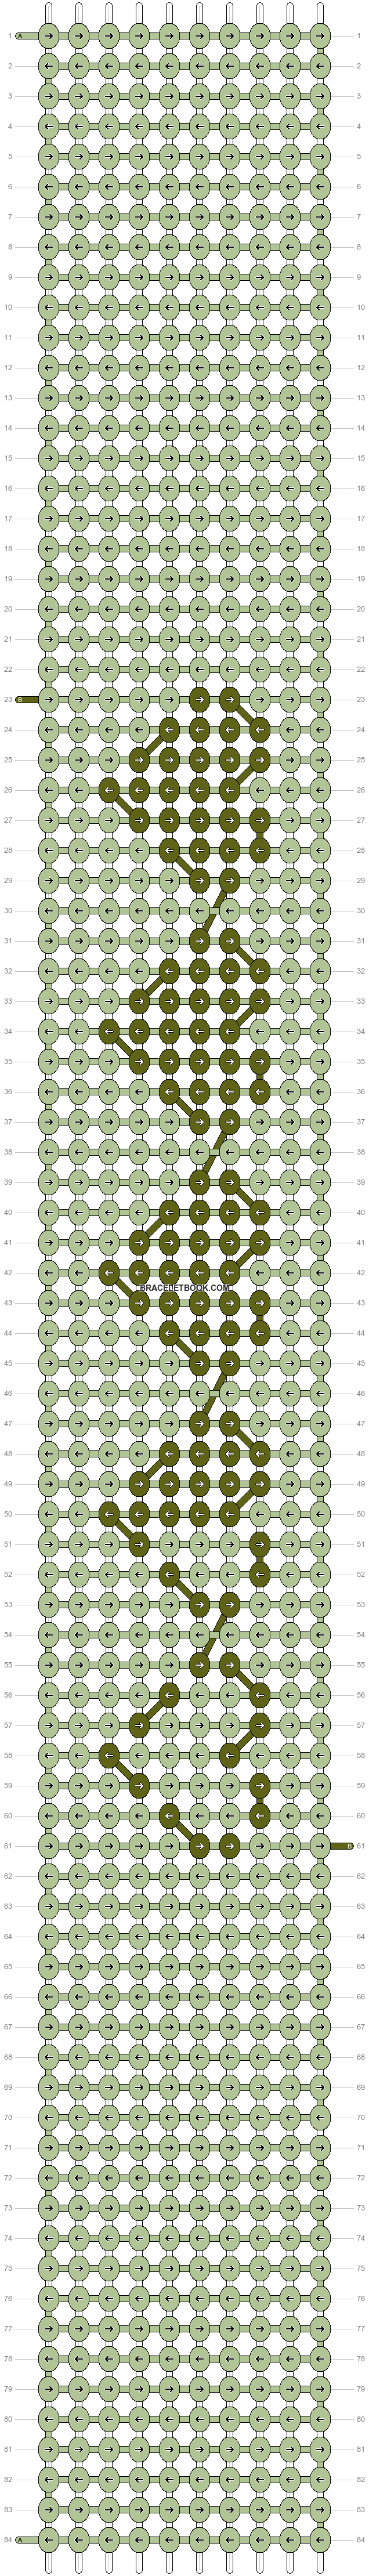 Alpha pattern #17376 variation #50478 pattern